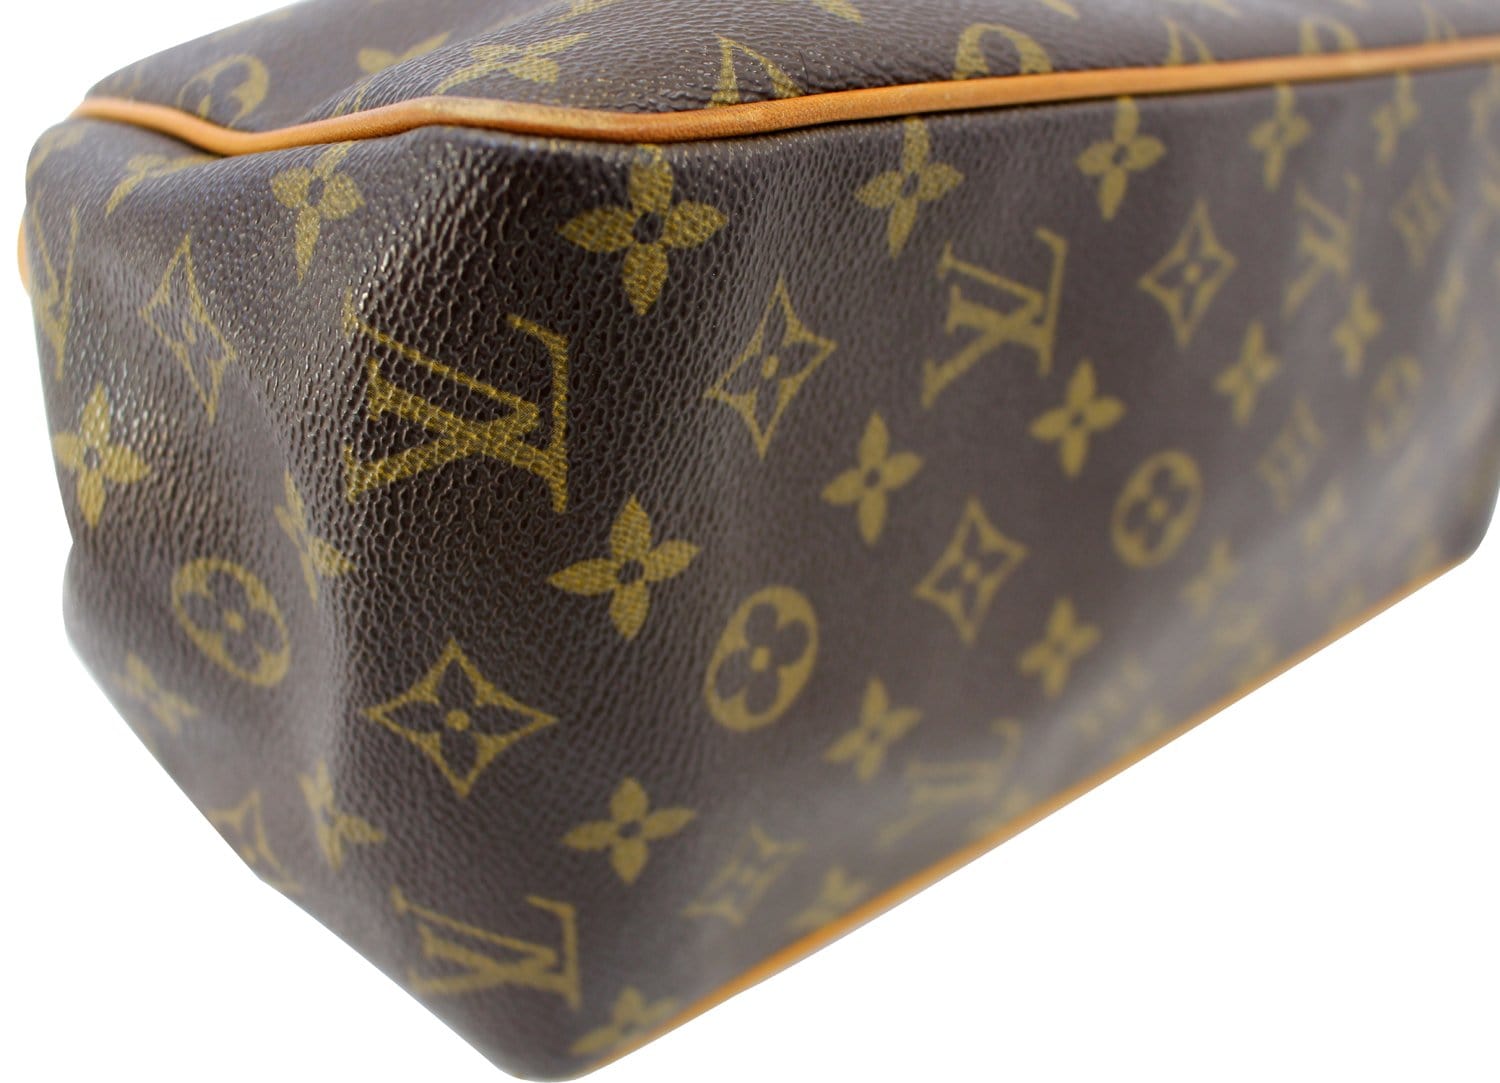 PRELOVED LOUIS VUITTON Monogram Batignolles Horizon Shoulder Bag